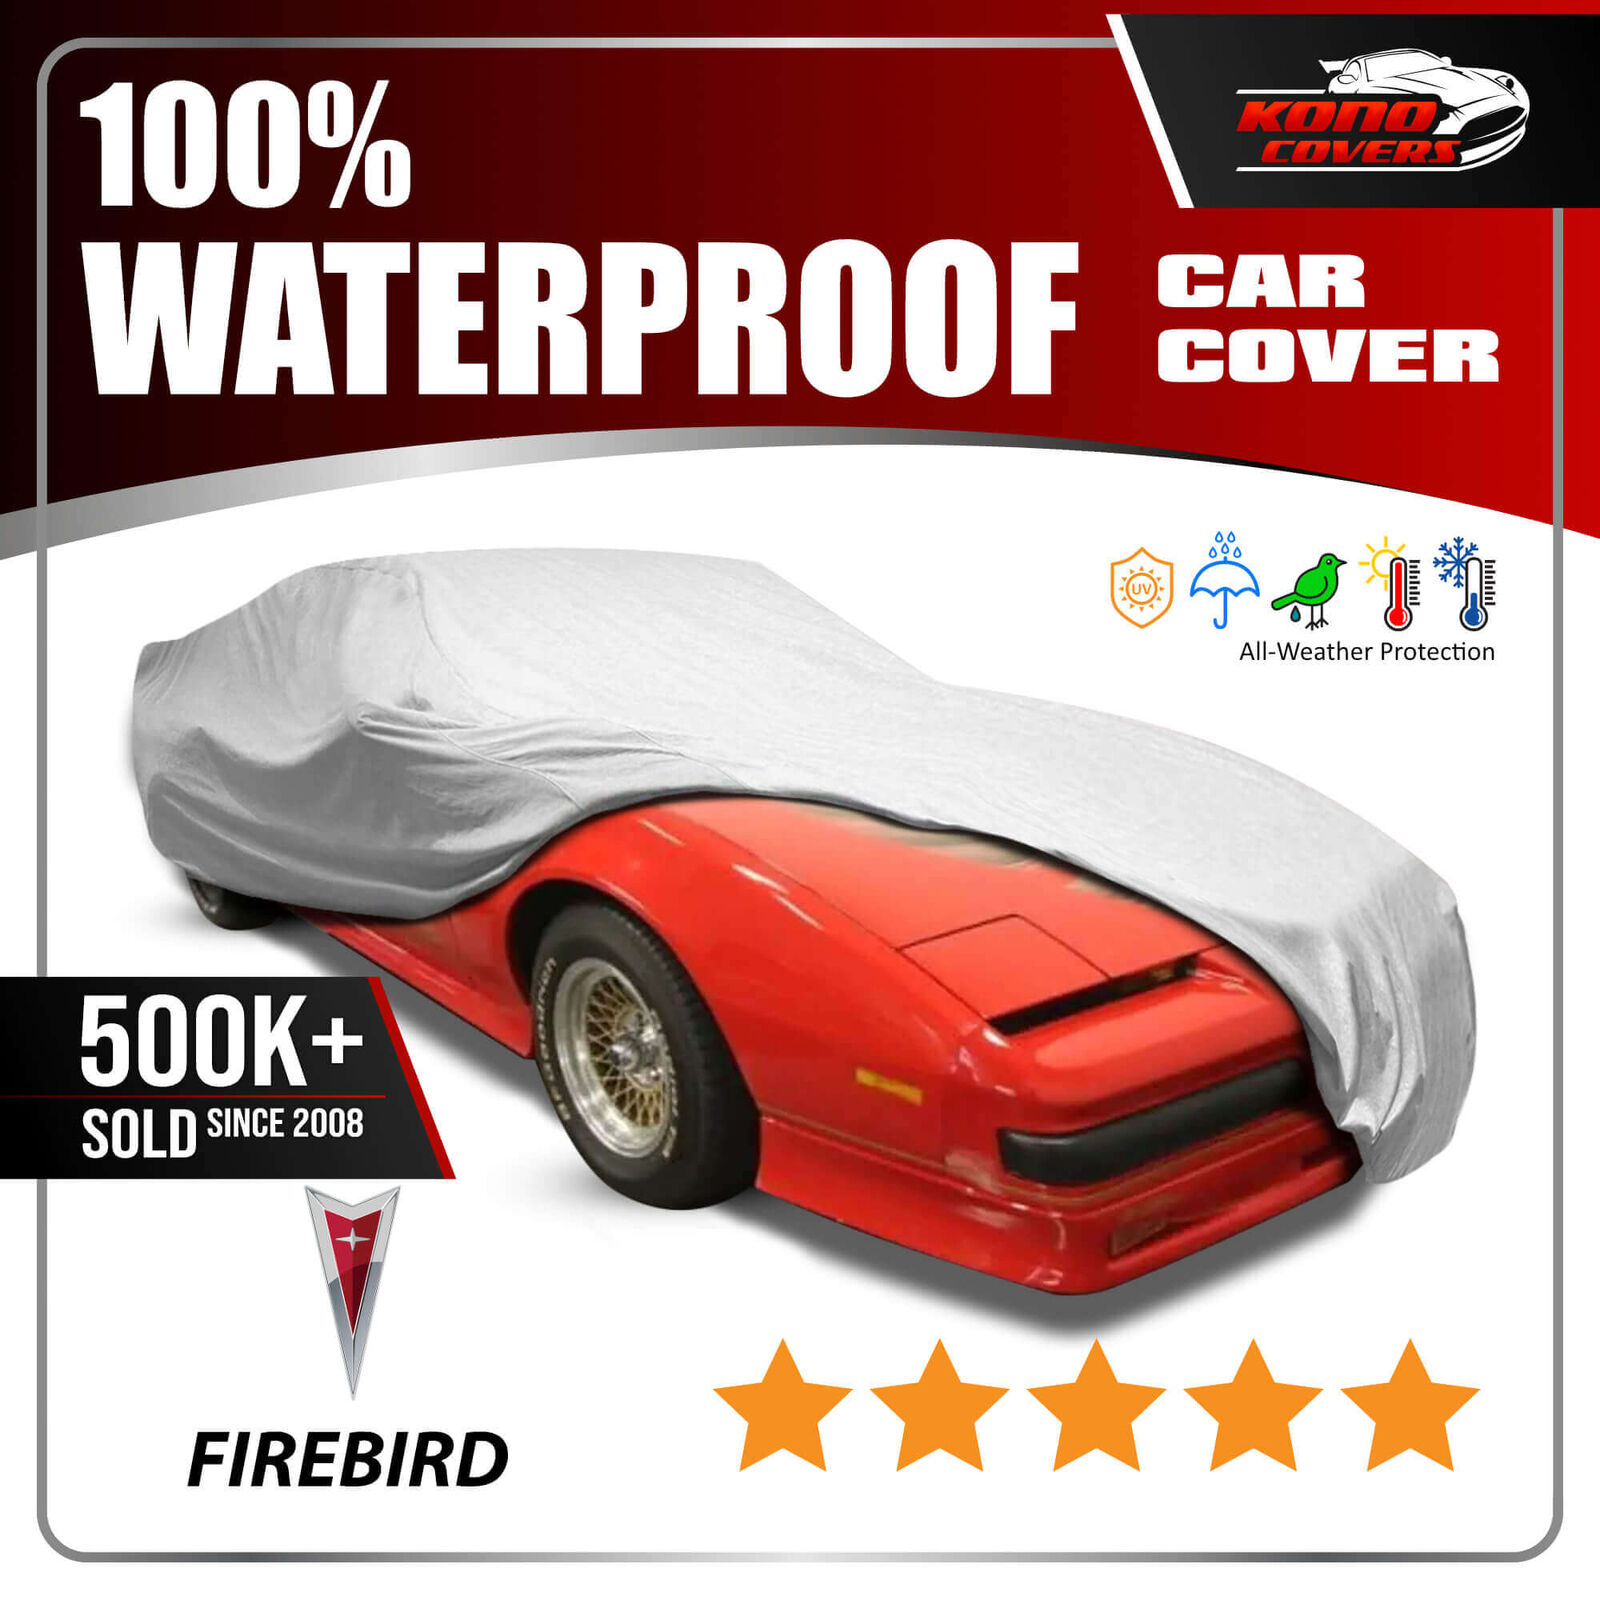 PONTIAC FIREBIRD 1982-1990 CAR COVER - 100% Waterproof 100% Breathable